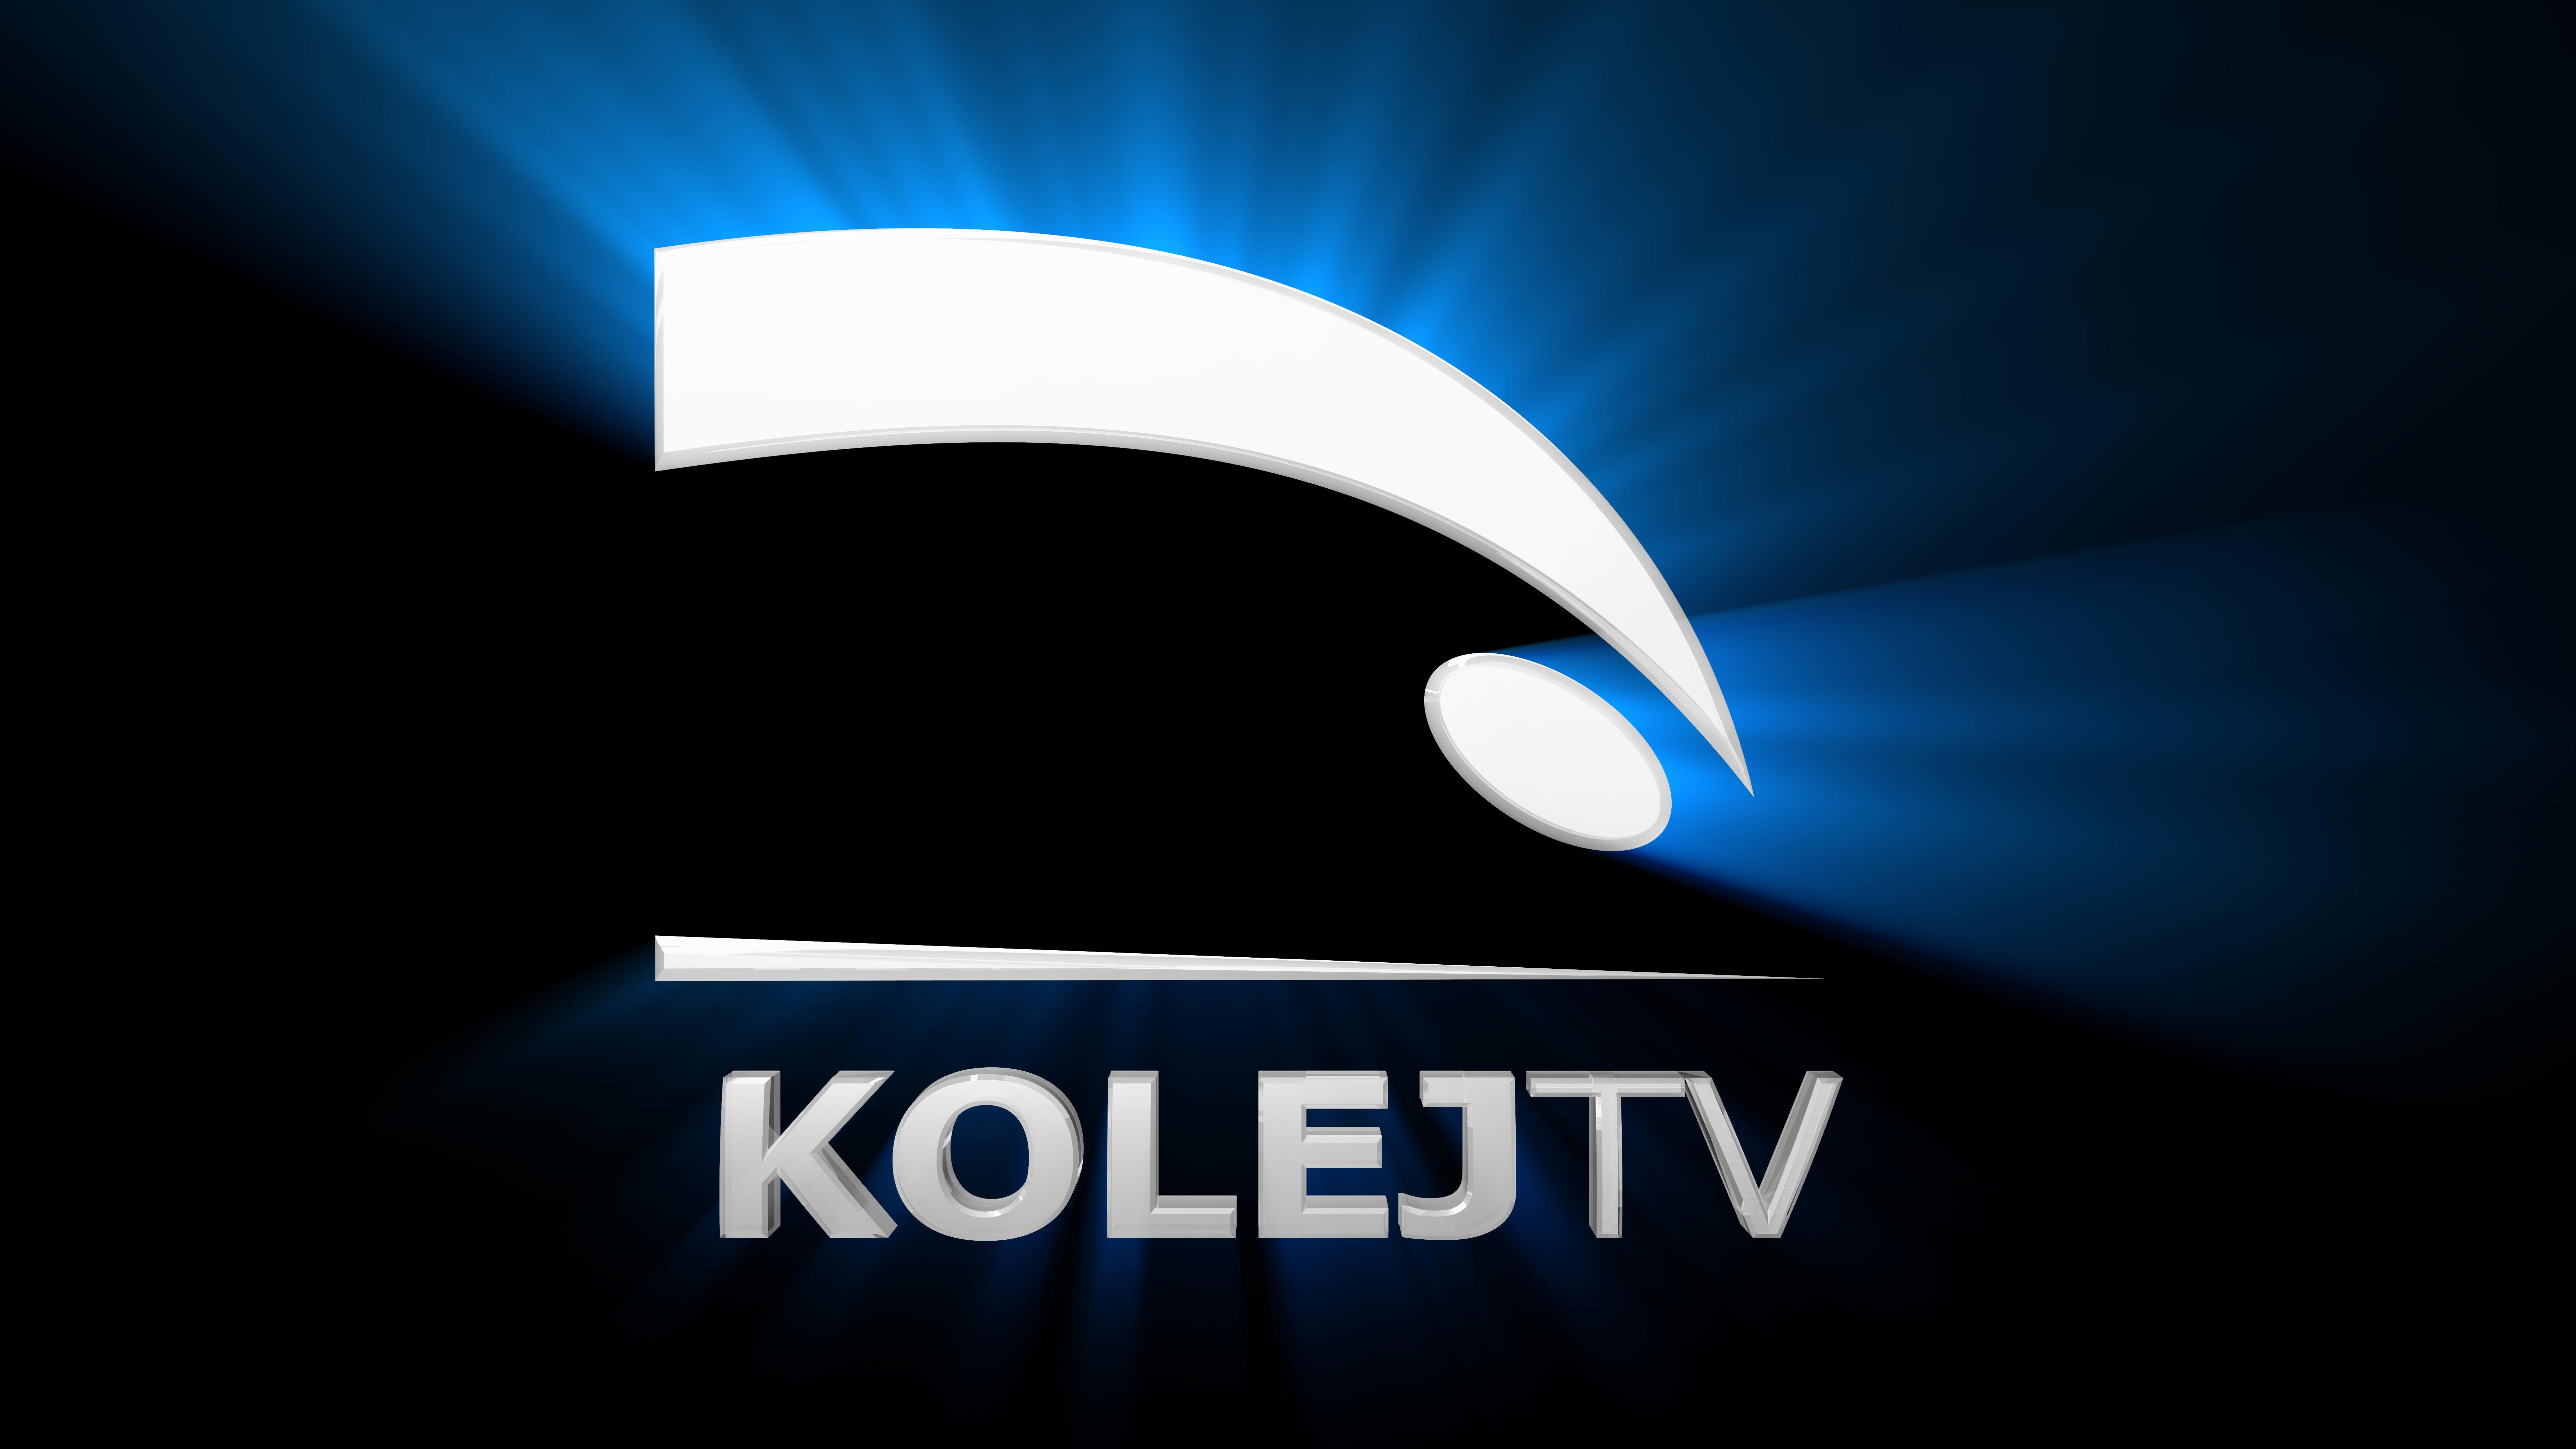 ikolejtv.pl